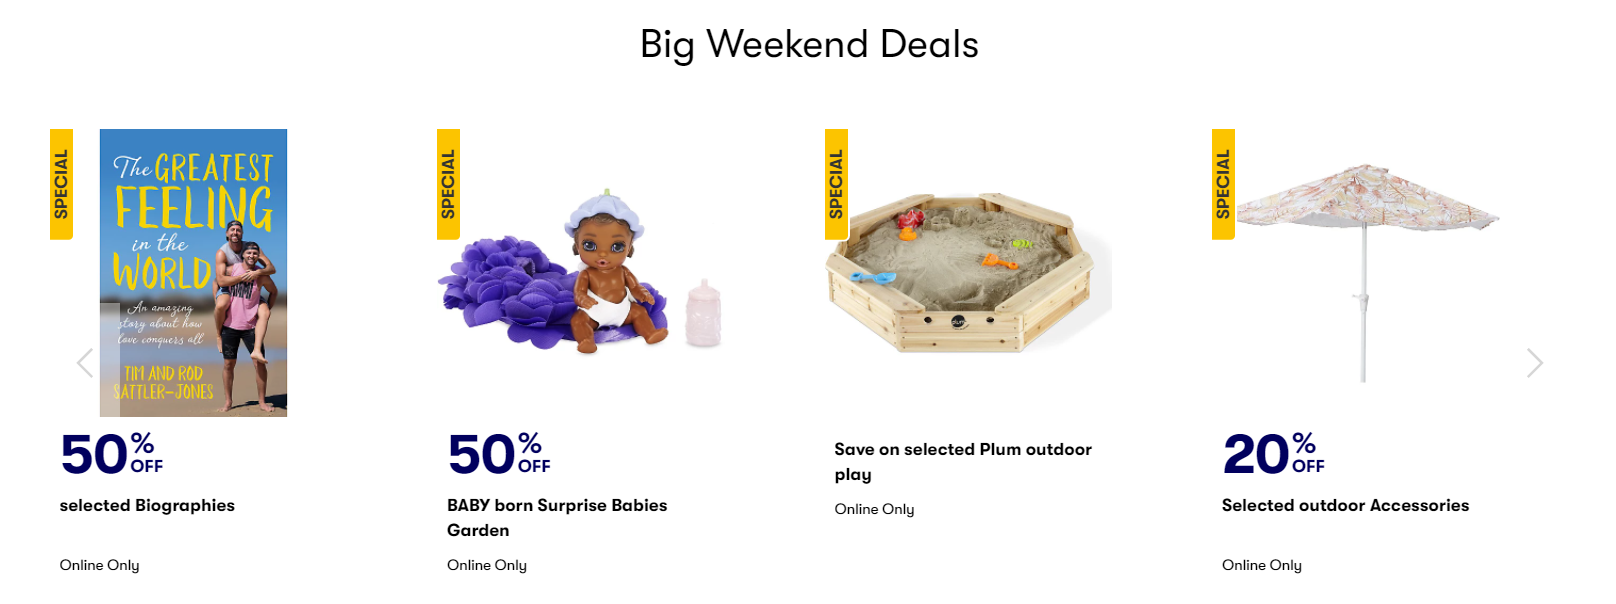 Big W Weekend deals Up to 50% OFF on Biographies, baby garden, outdoor accessories & more